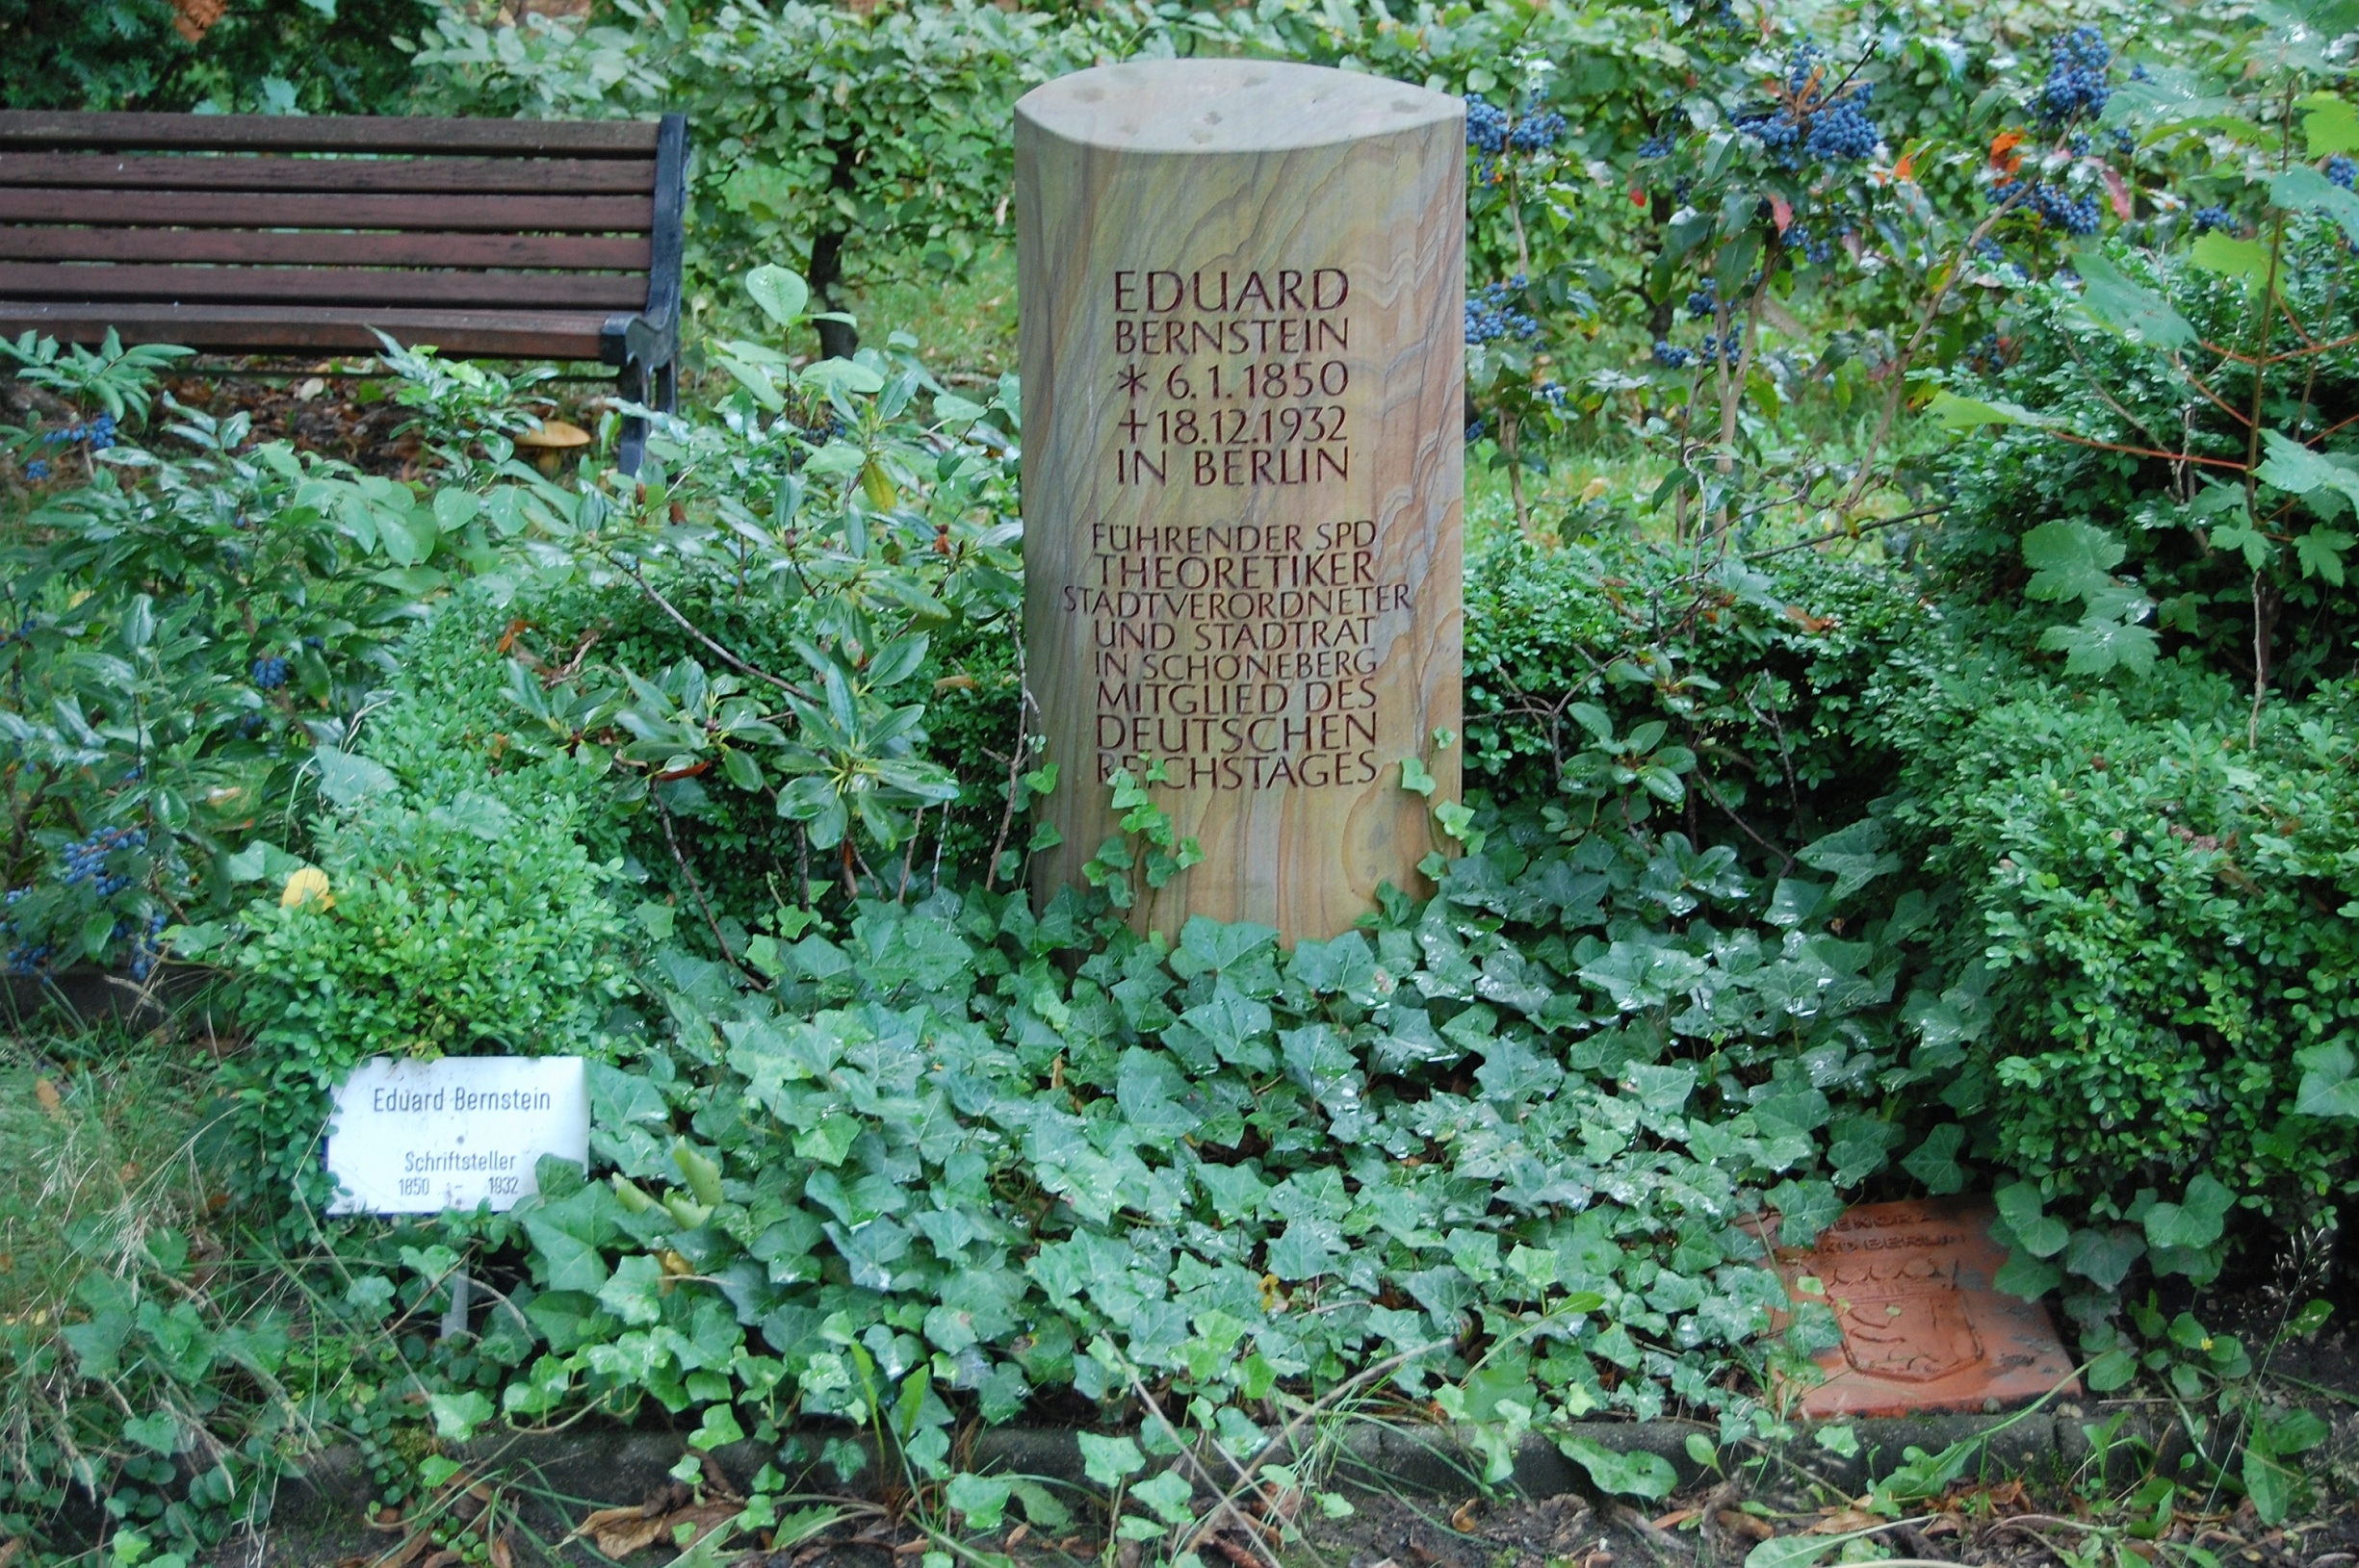 Grave of socialdemocratic theorist Eduard Bernstein (de:SPD) at graveyard de:Friedhof Schöneberg I, Berlin, Germany, with new gravestone. Photo: taken 28. August 2010 by Informant3000. (CC BY-SA 3.0). 